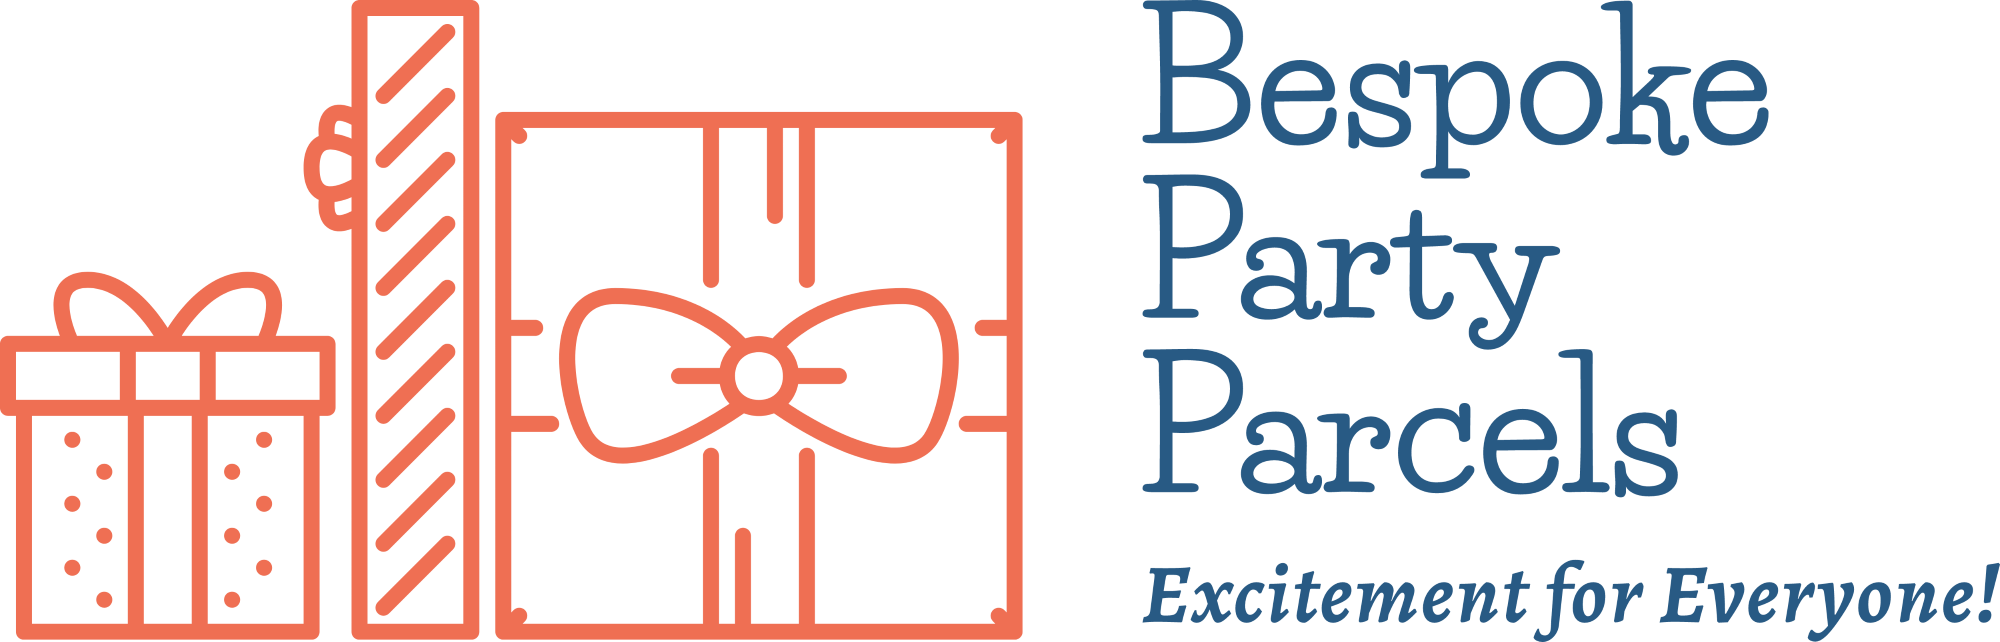 Bespoke Party Parcels Logo